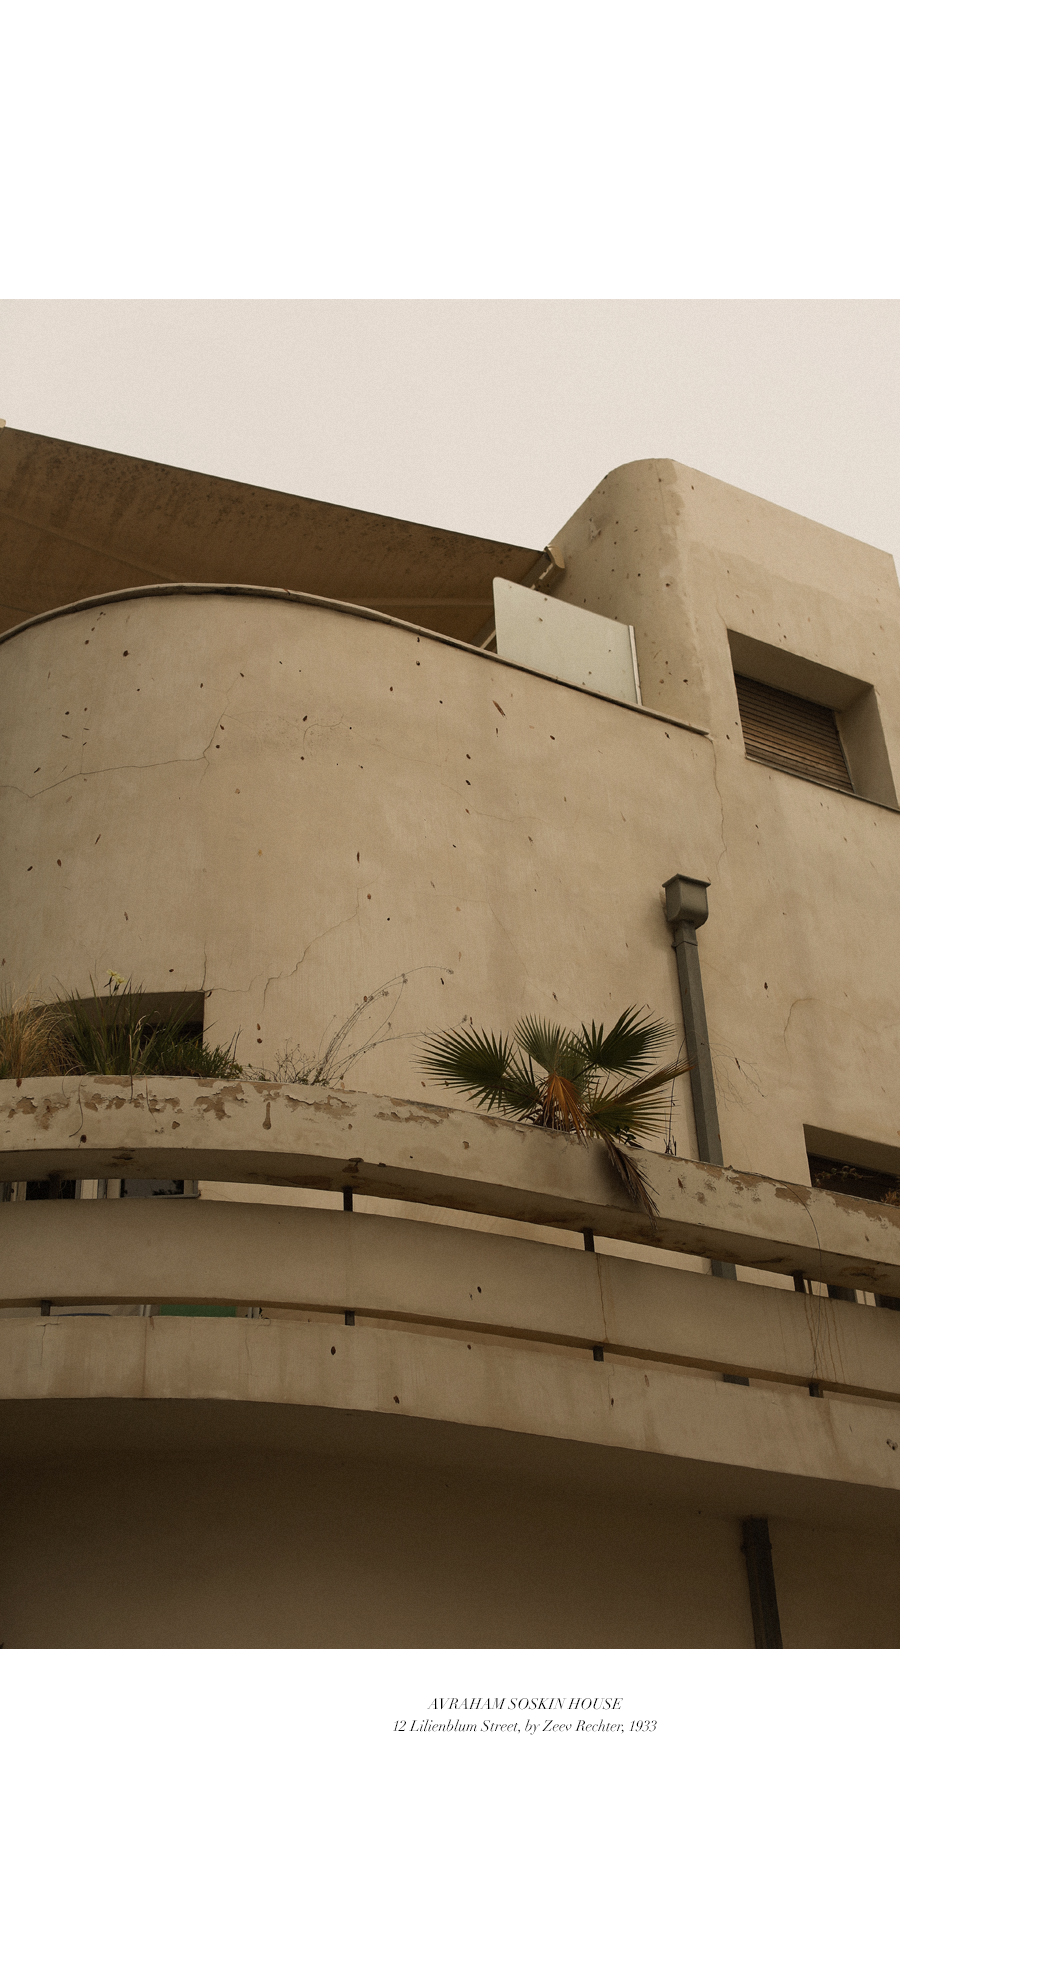 BAUHAUS Architecture Tel Aviv, Israel - A visual guide by Fiona Dinkelbach